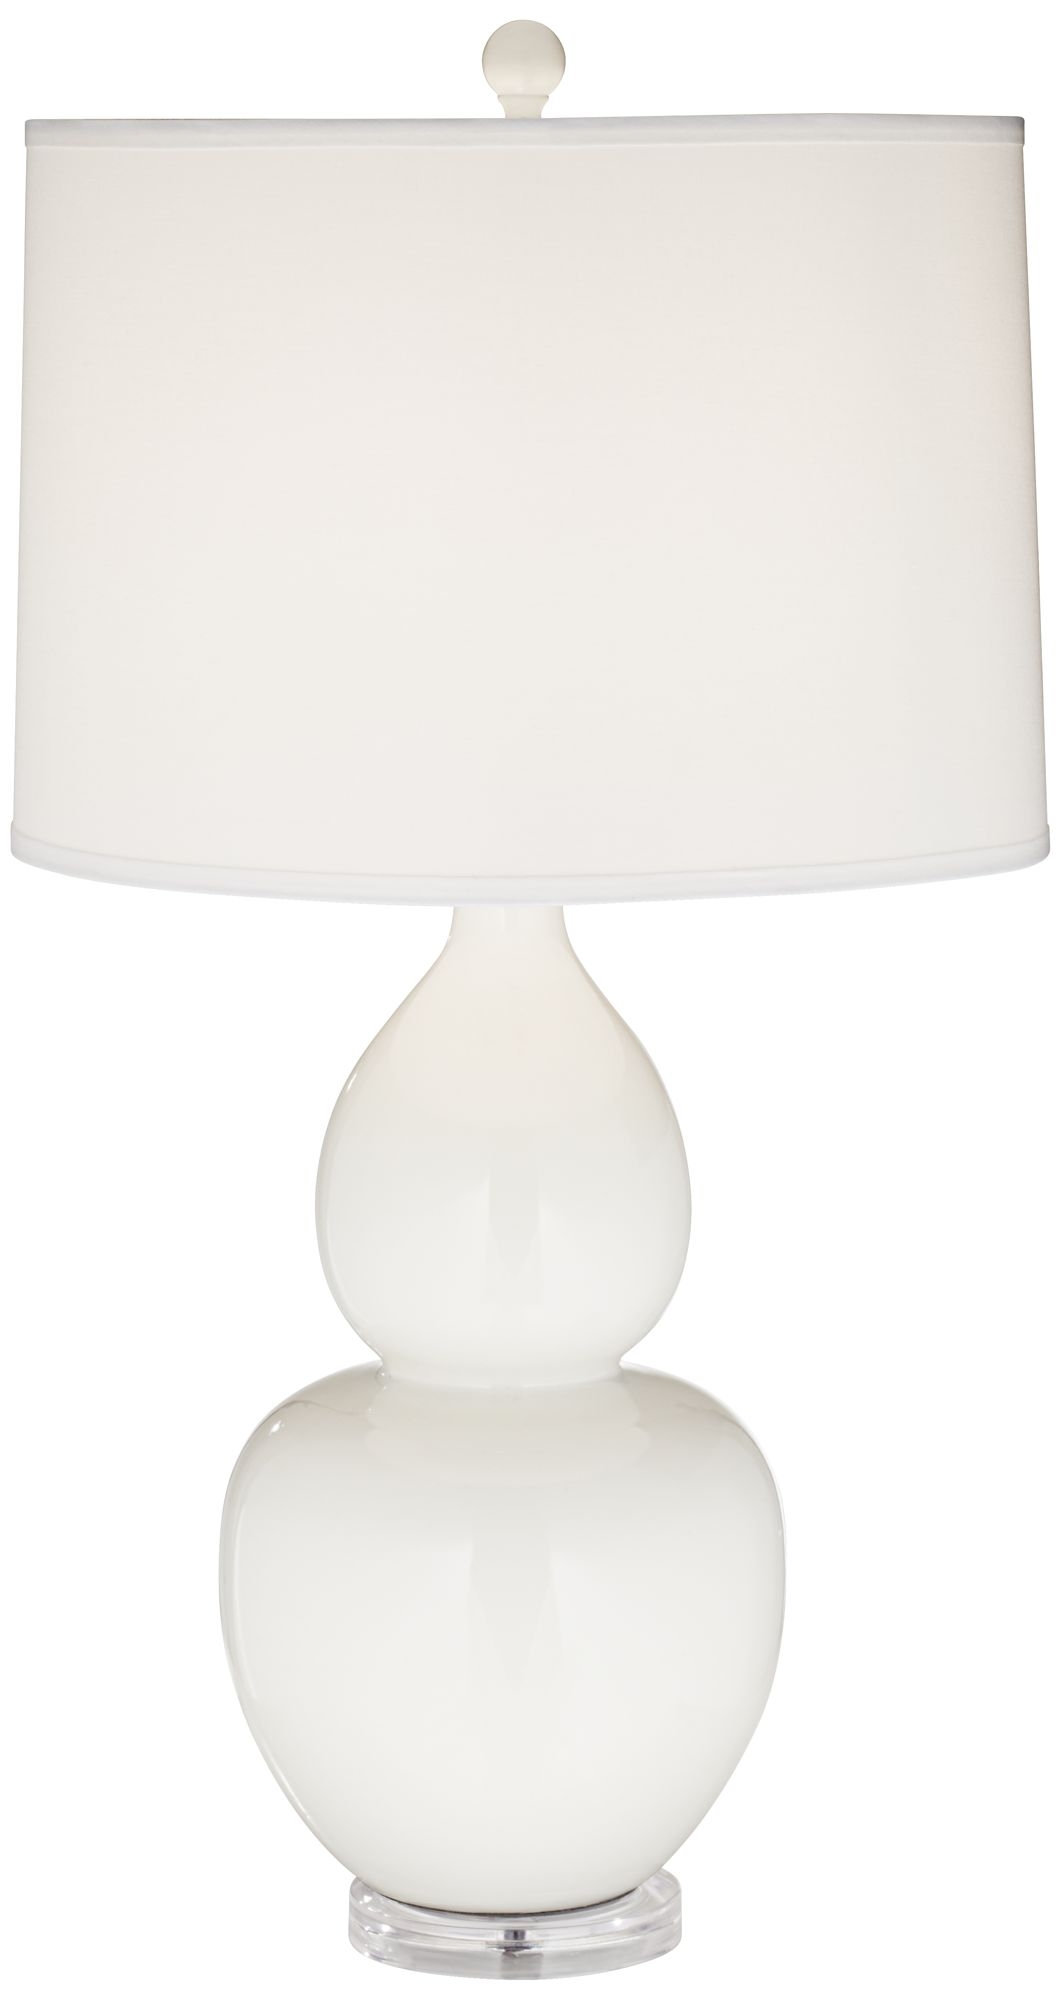 Contempo White Double Gourd Ceramic Table Lamp - Image 0